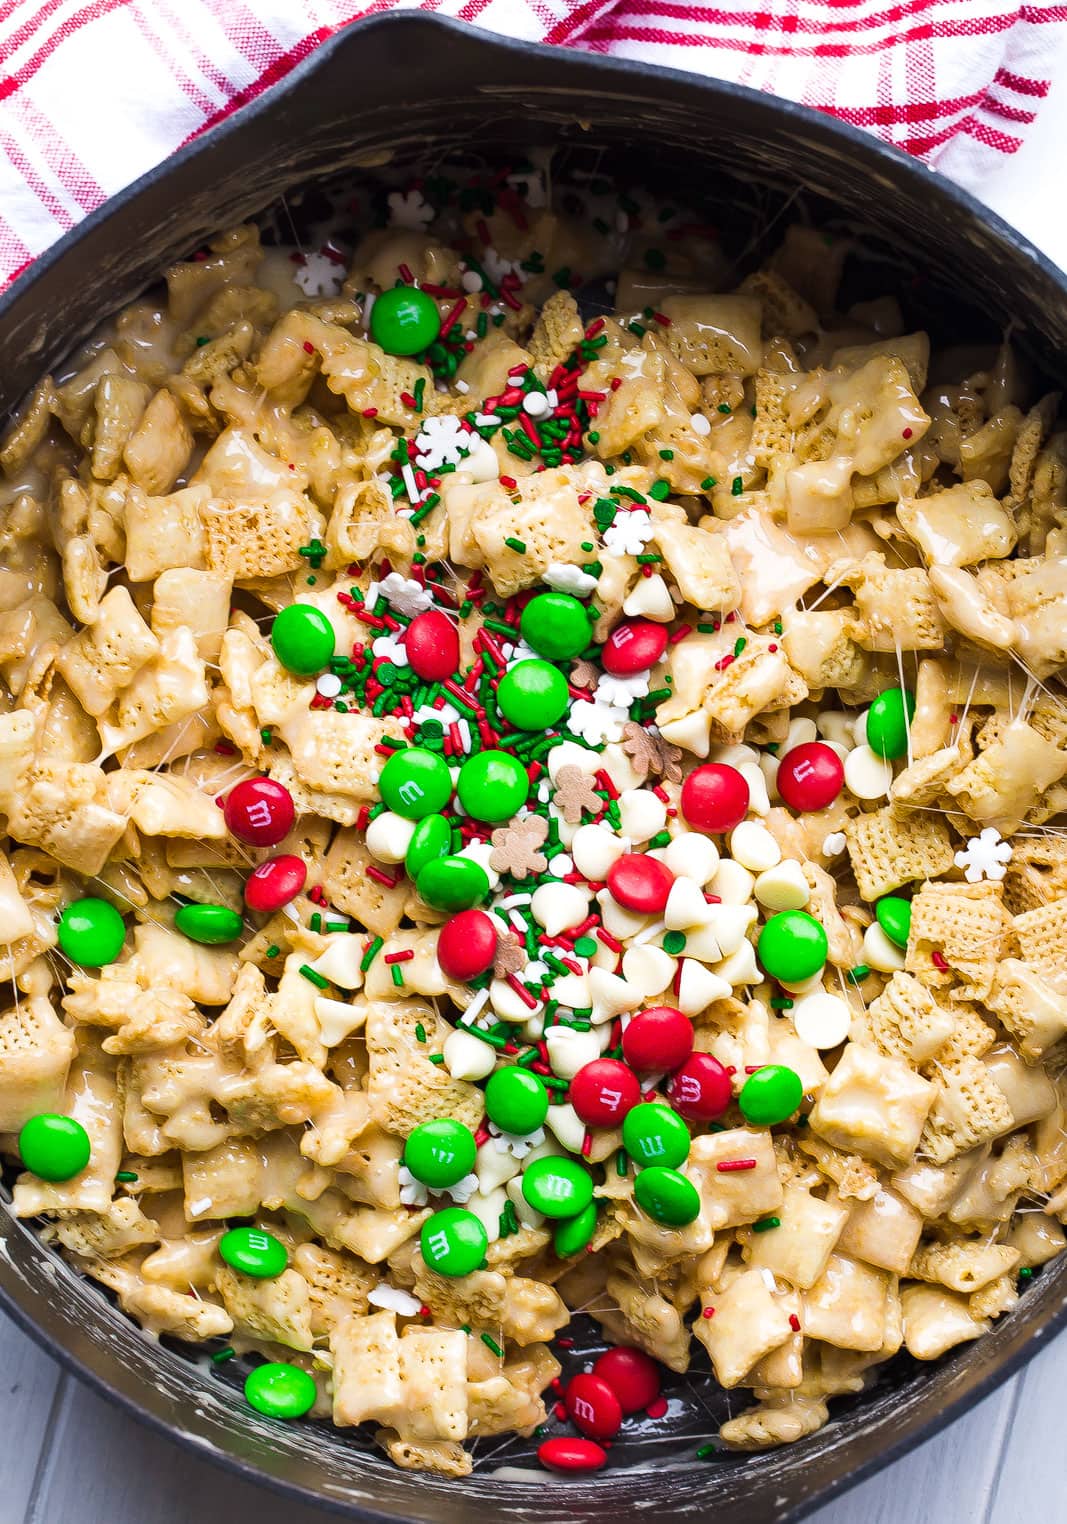 How to make Christmas rice krispie treats.